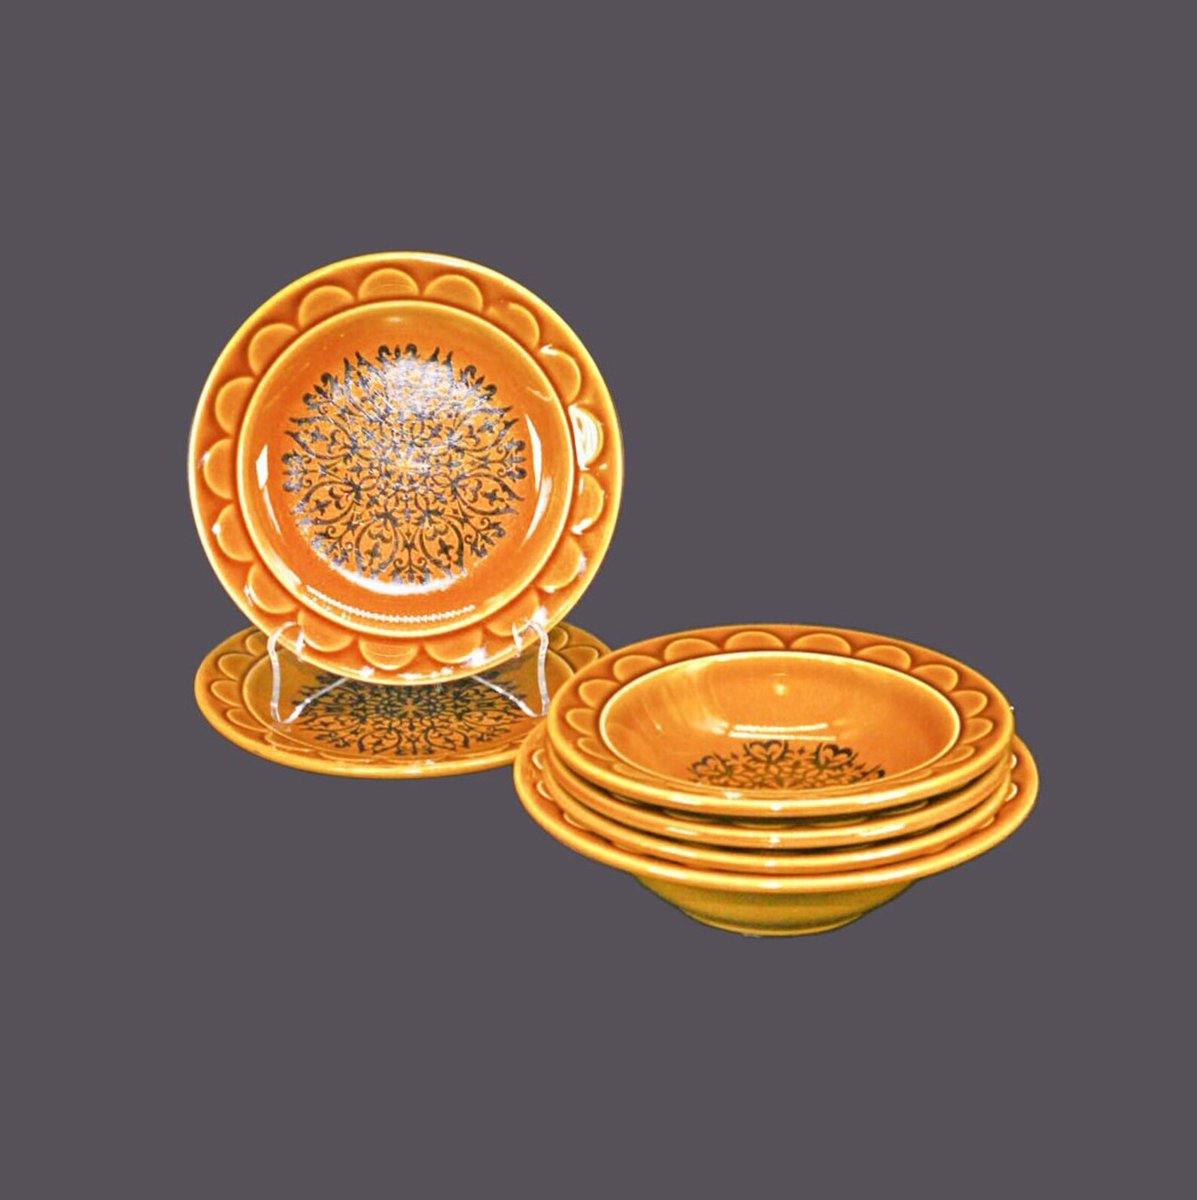 Homer Laughlin Cortez stoneware. Plates, bowls. Castilian stoneware made in USA. etsy.me/3whHjkz via @Etsy #BuyfromGroovy #antiqueshop #tableware #tabledecor #dinnerware #stoneware #HomerLaughlin #CastiliamStoneware #LaughlinCortez #1970skitchen #retrodishes #EtsySellers